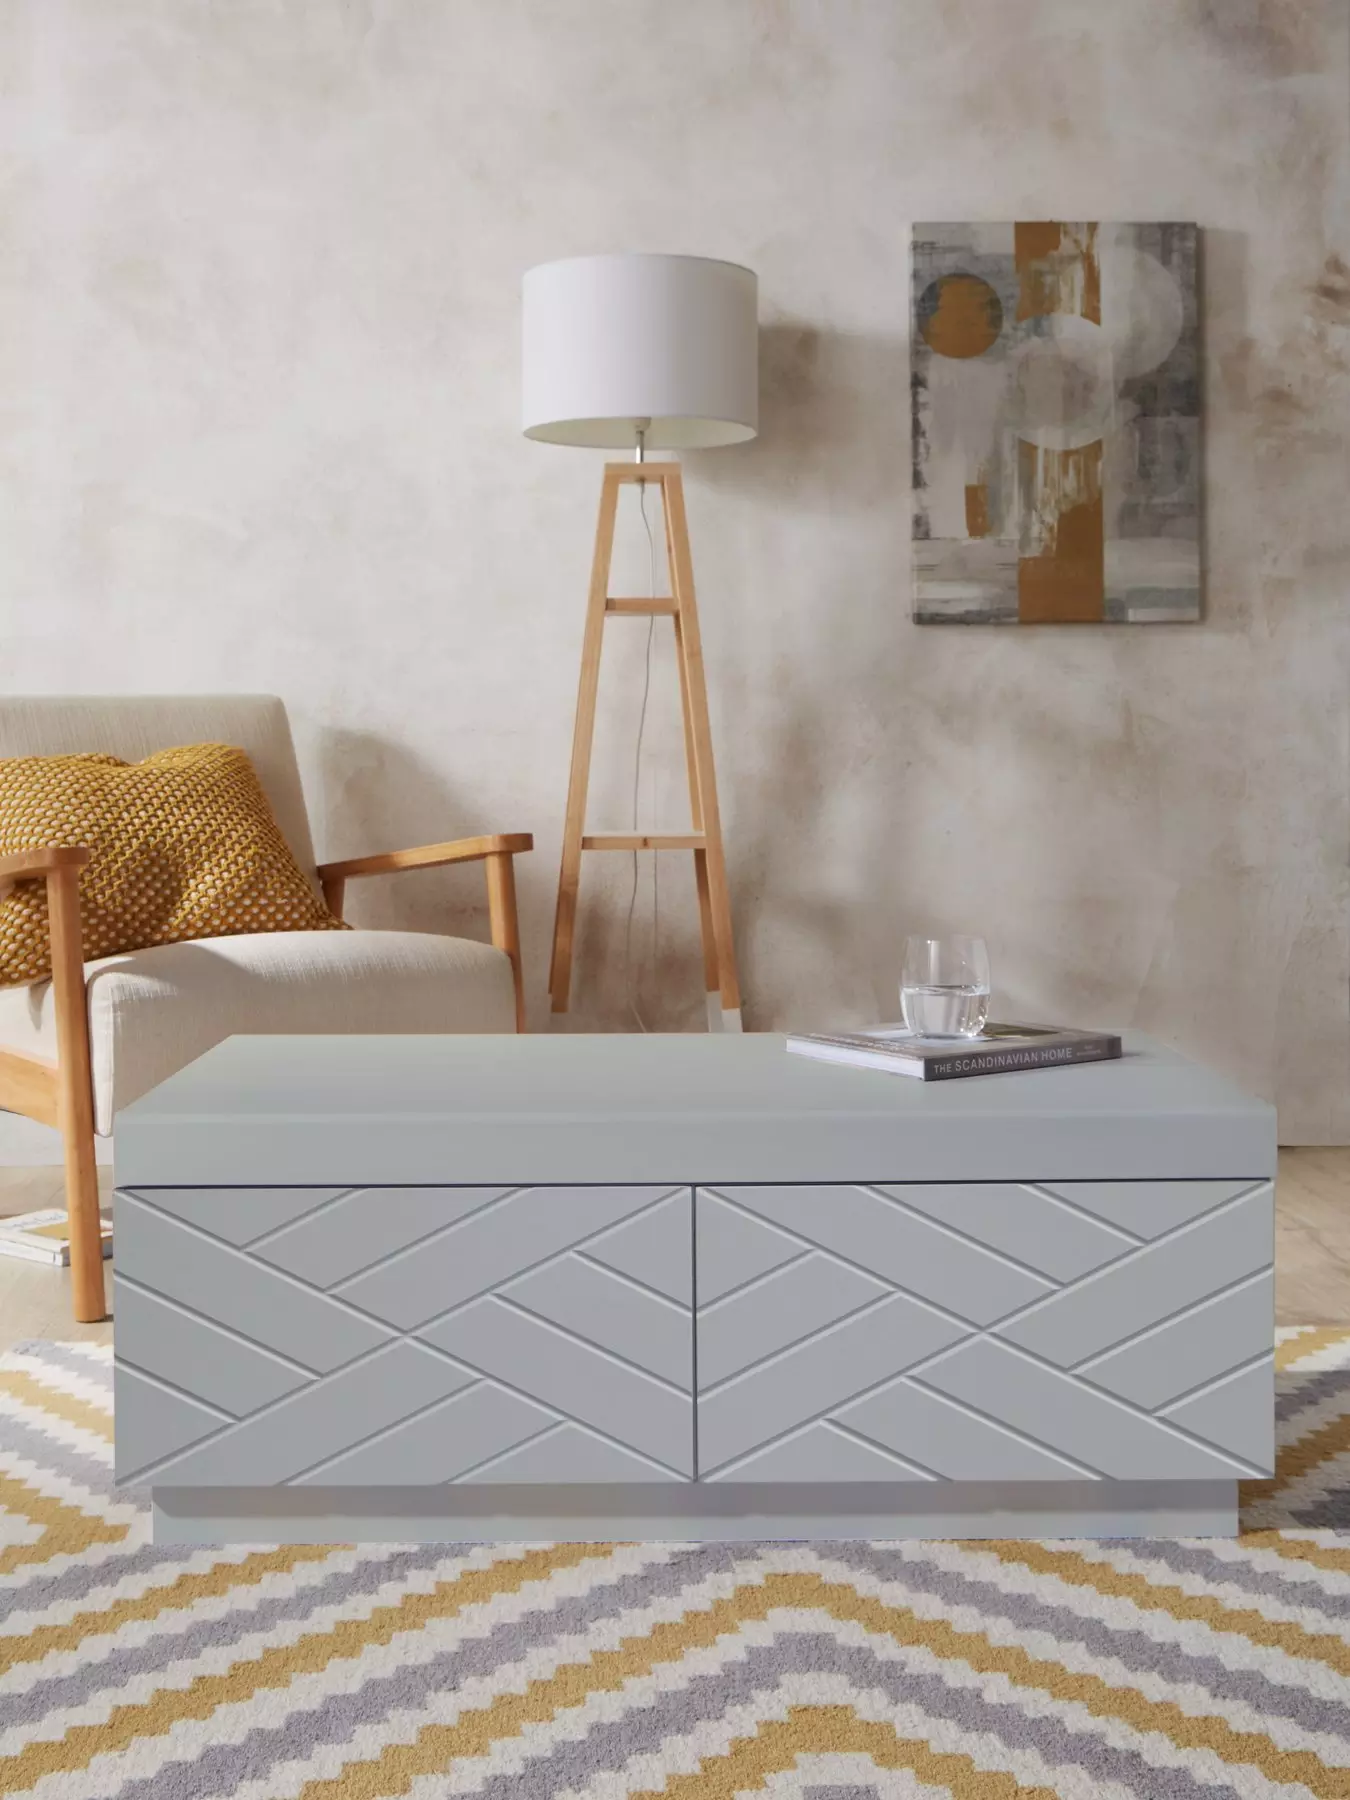 SCALLOP EDGE, MALM Kit, IKEA® Furniture Decor Overlay Panels - Drawe